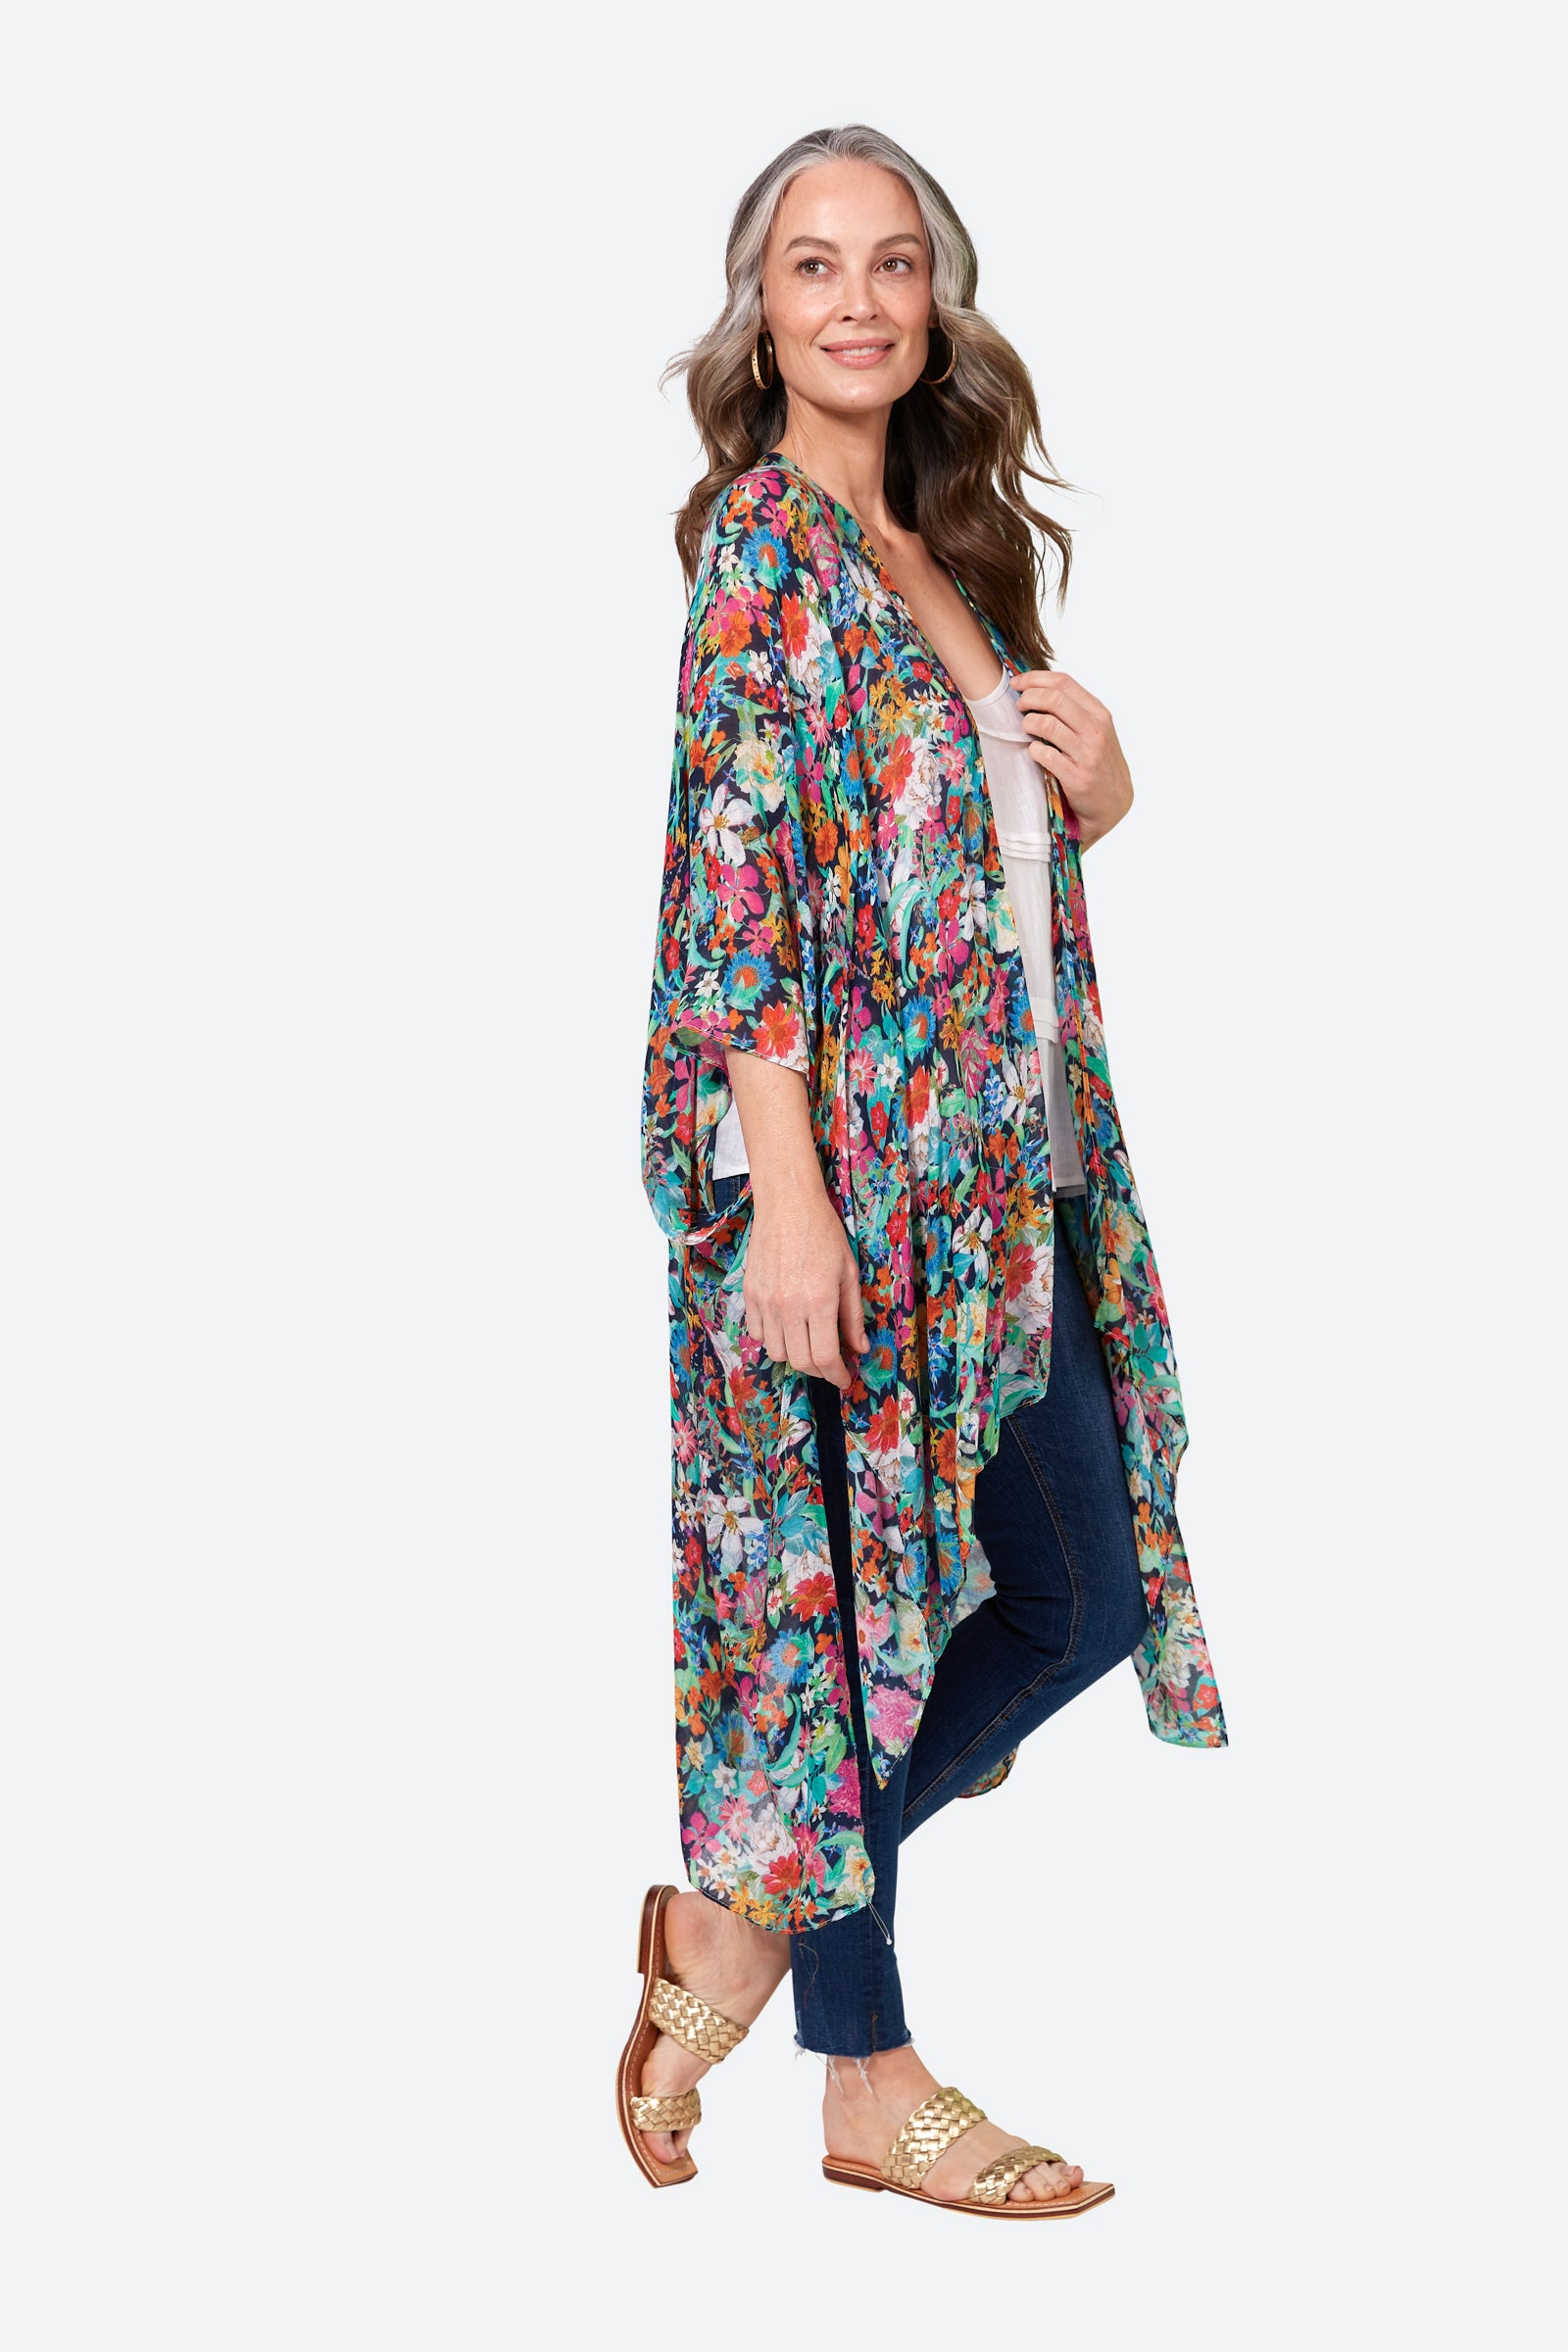 Esprit Cape - Navy Flourish - eb&ive Clothing - Kimono Cape Long One Size